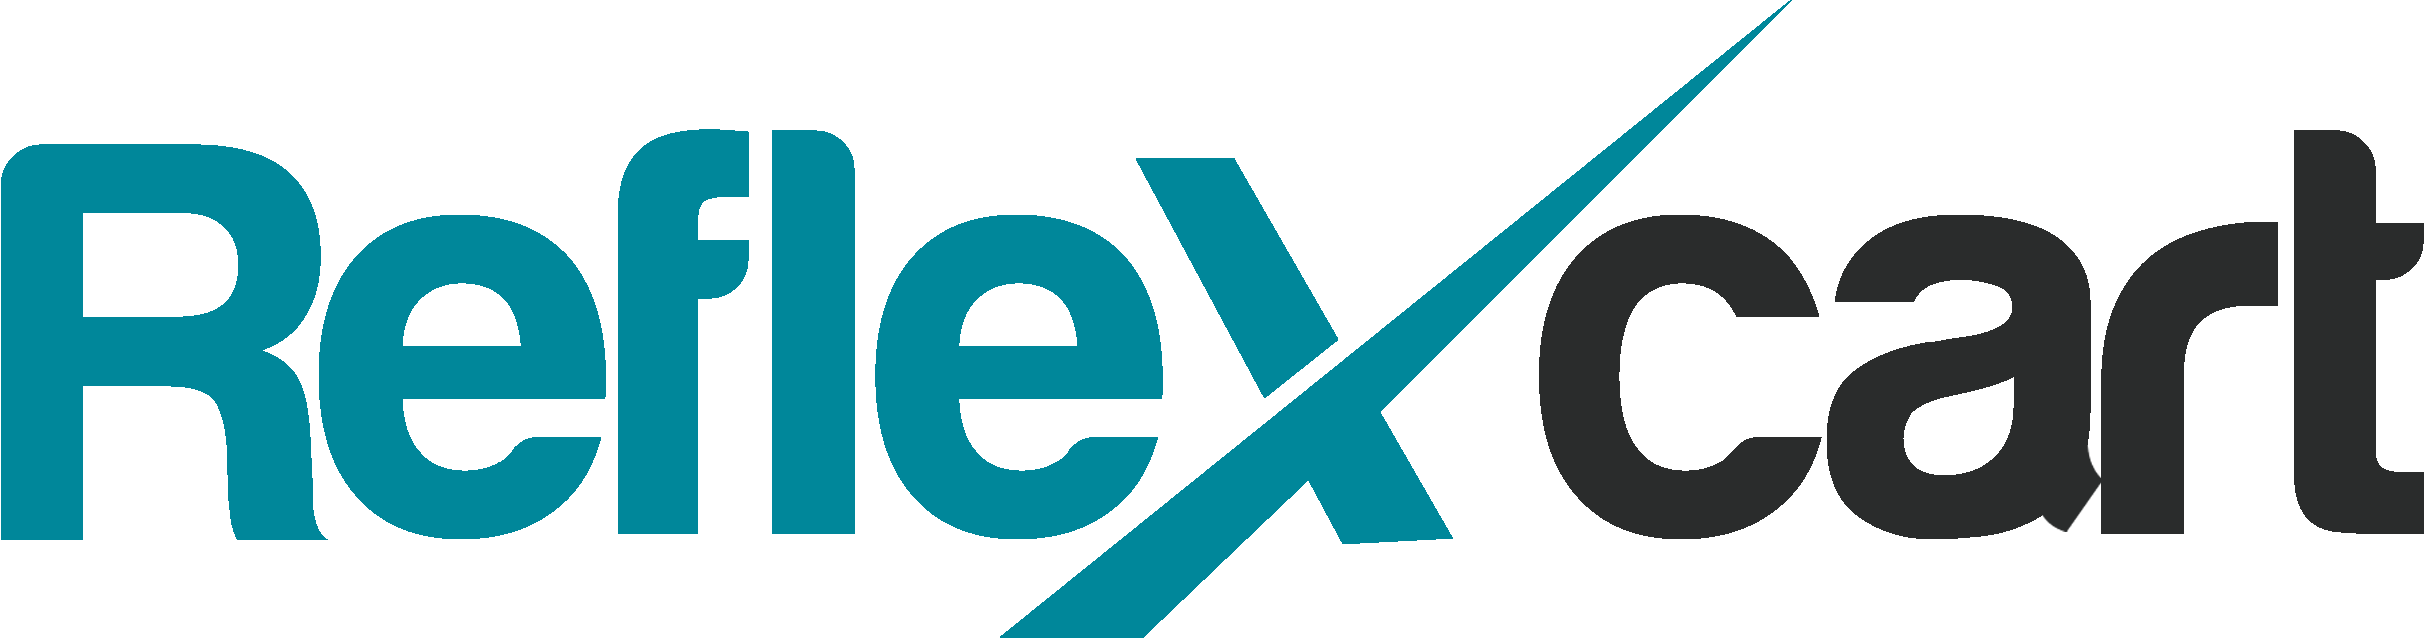 ReflexCart